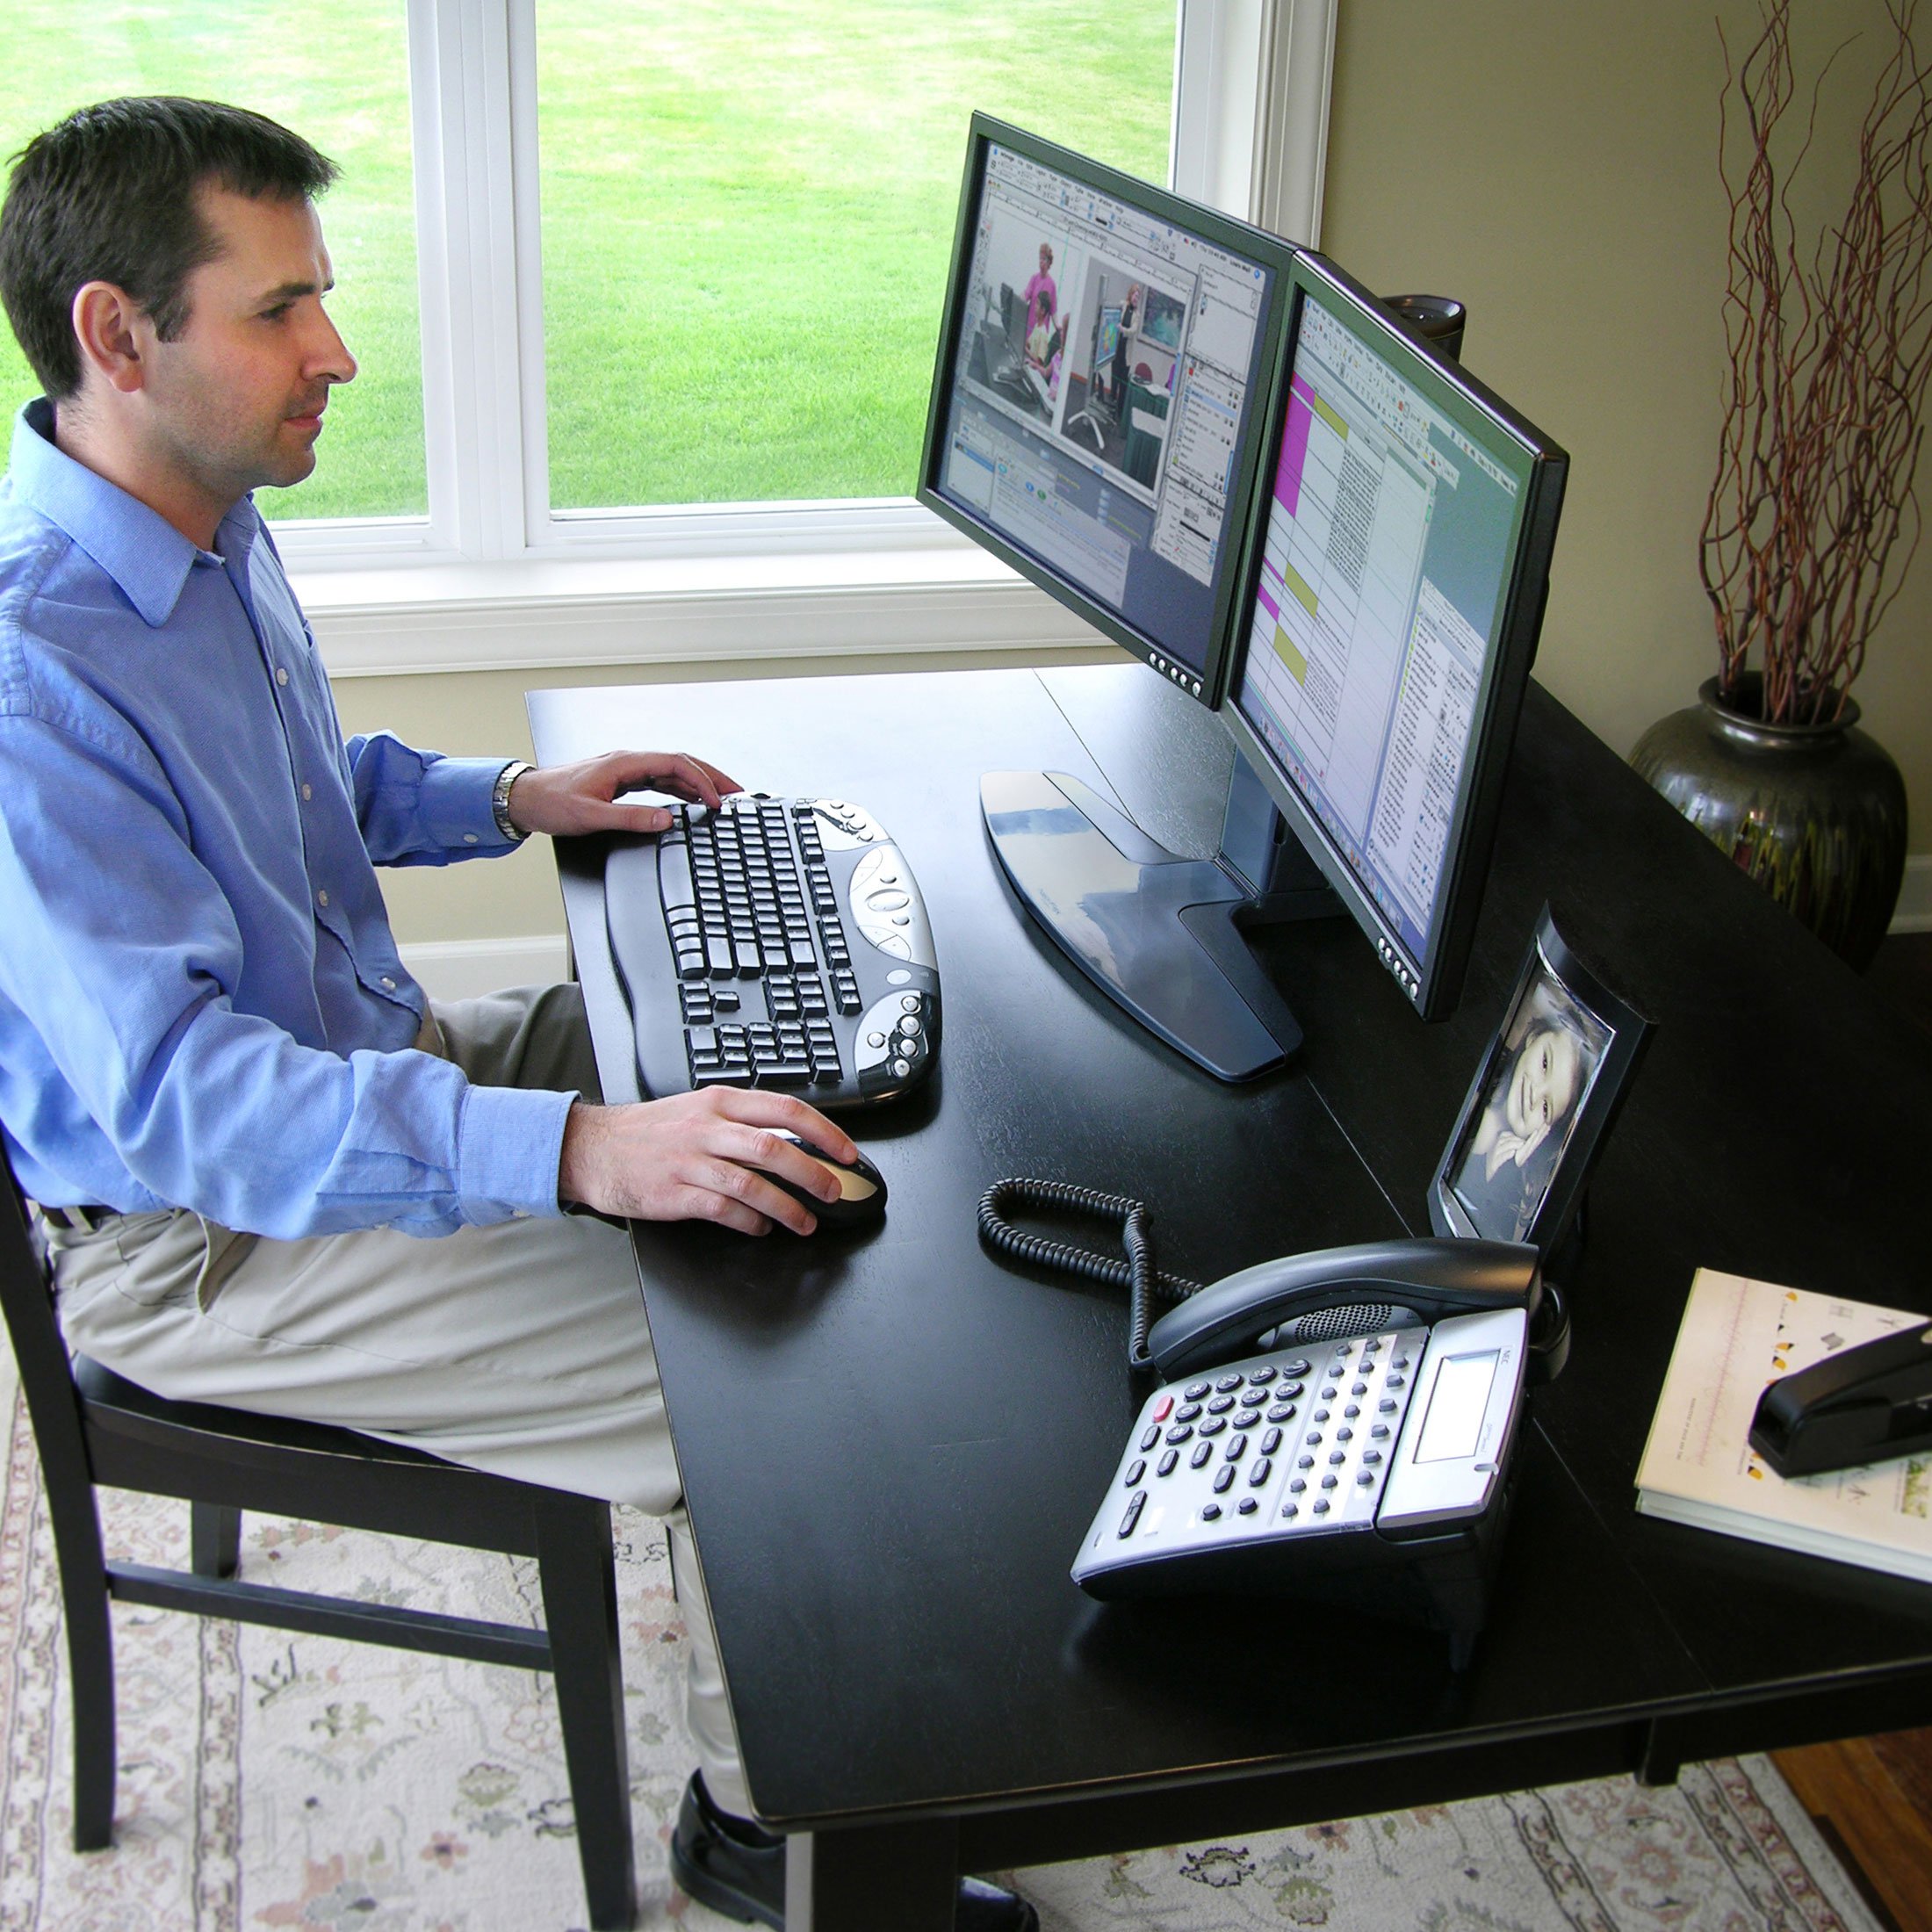 2 3 человека работающих на. Работа на компьютере. Компьютер в офисе. Сидит за компьютером в офисе. Рабочее место программиста в офисе.